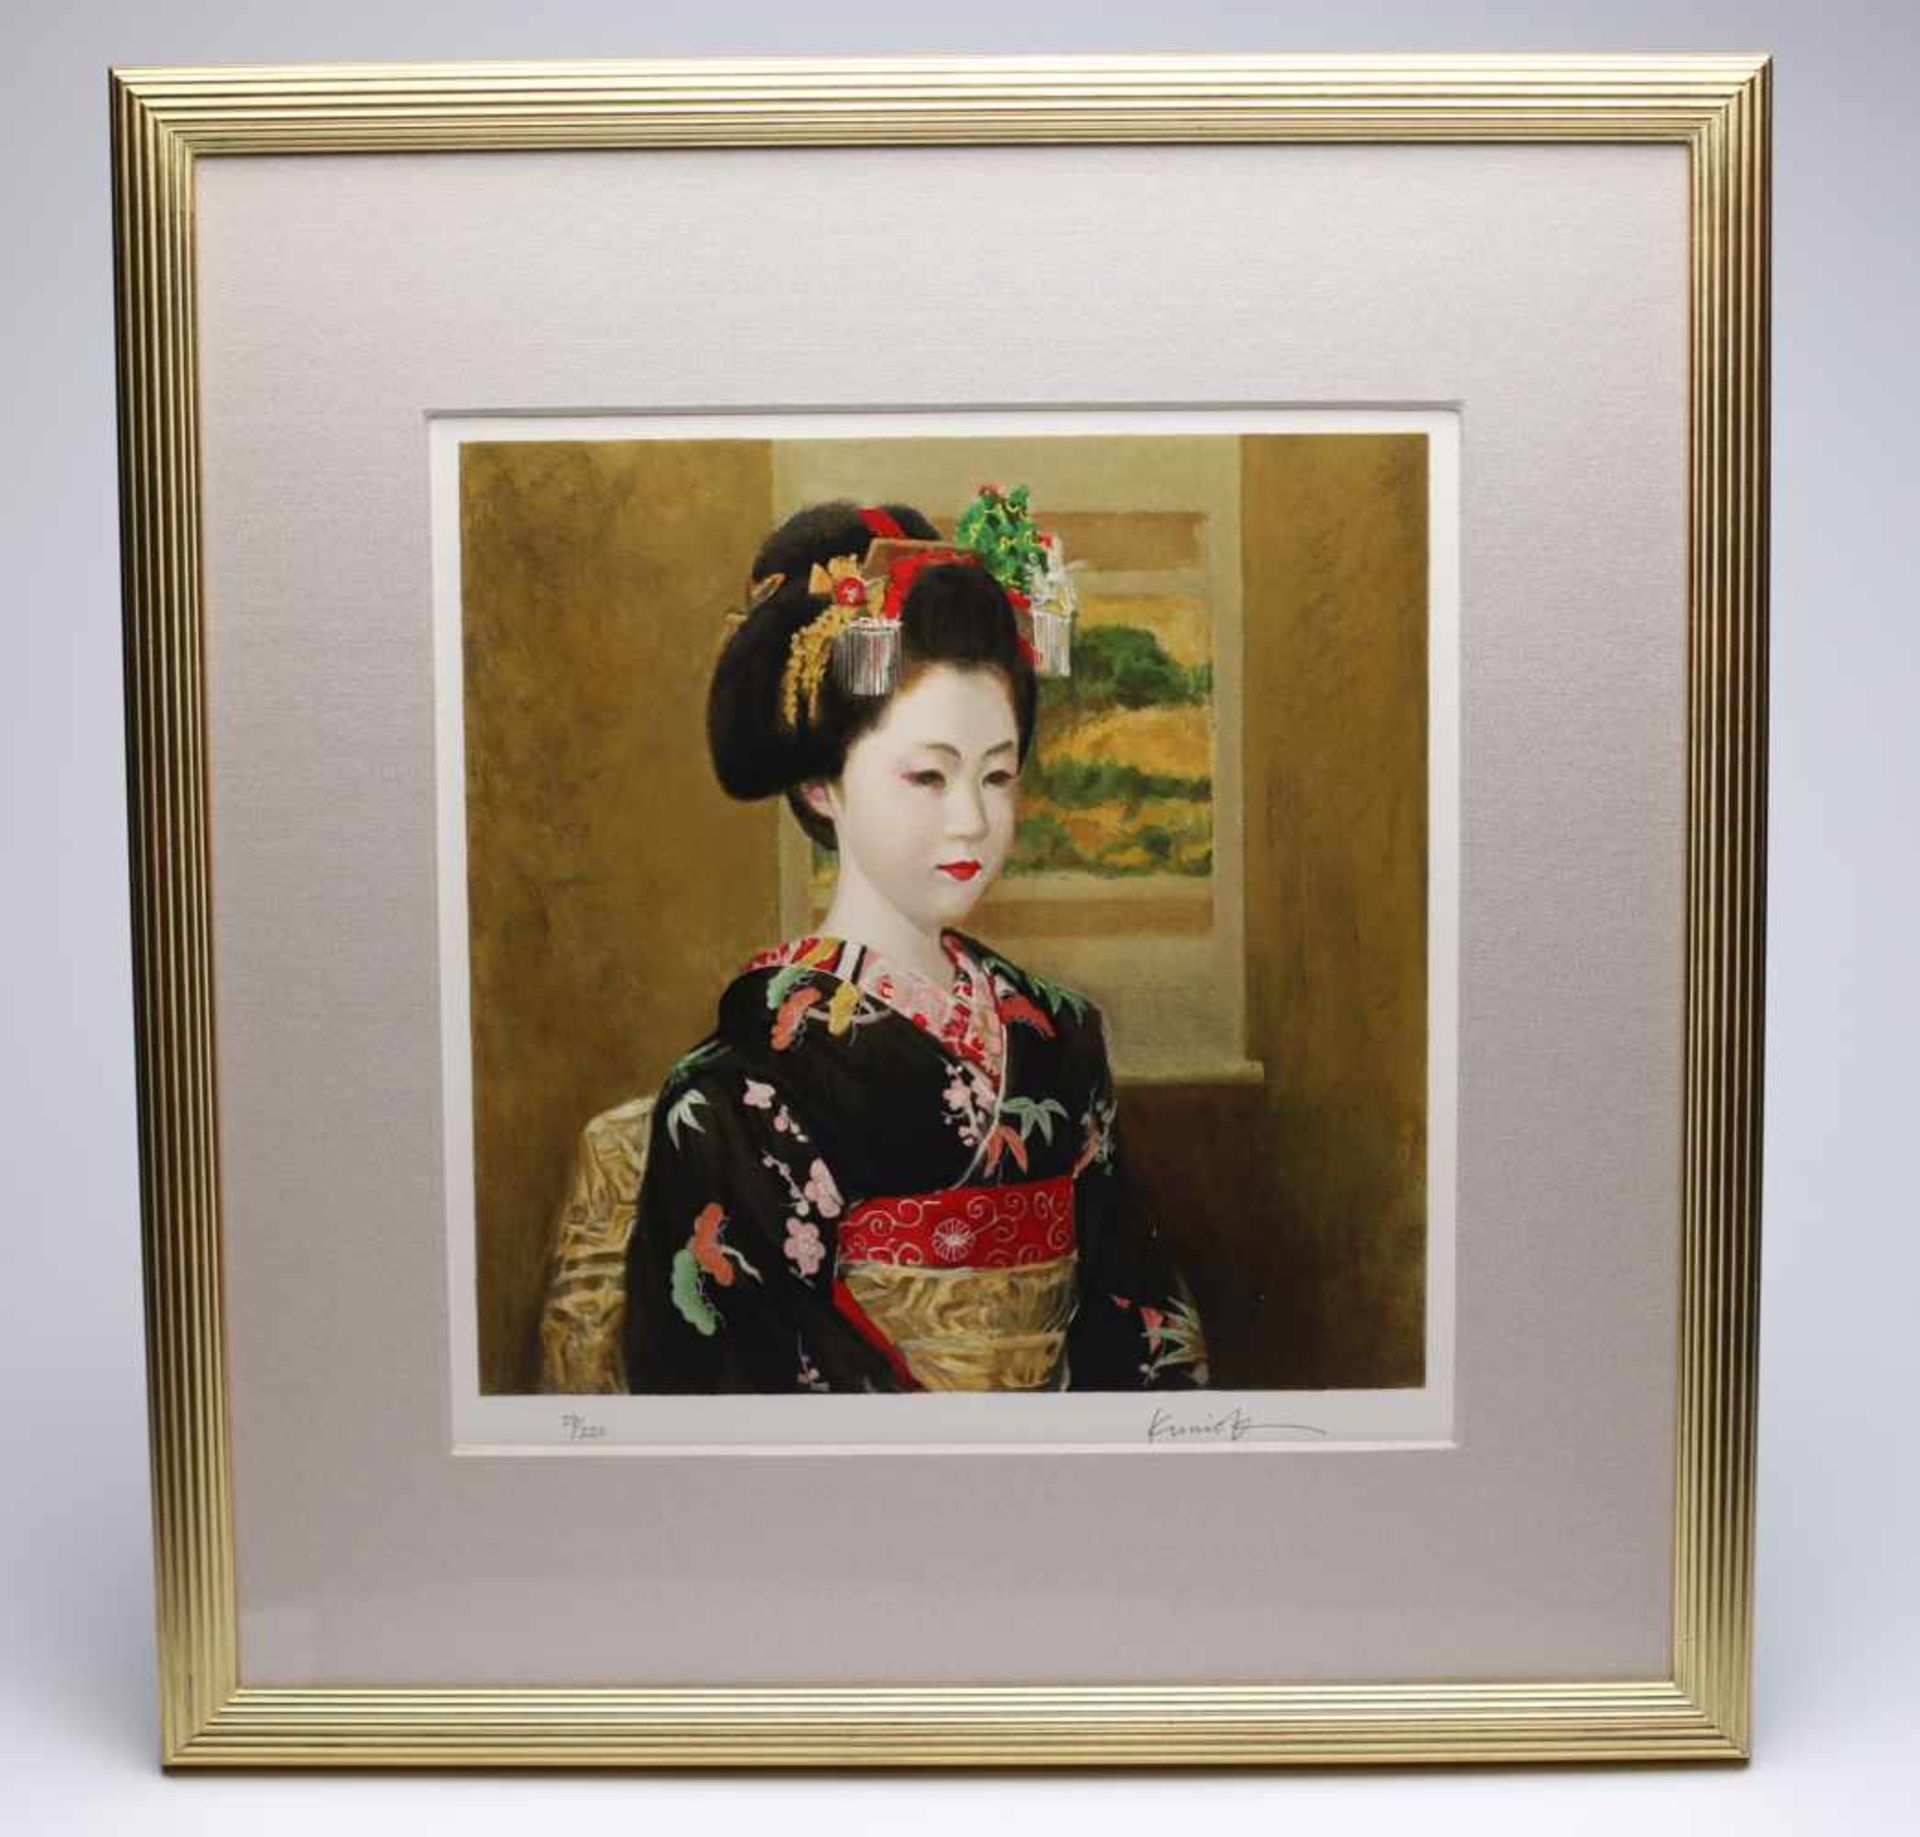 KOMATSUZAKI KUNIO (1931 - 1992)litograph,Japan, 19th century,Size: 38 cmA maiko is an apprentice